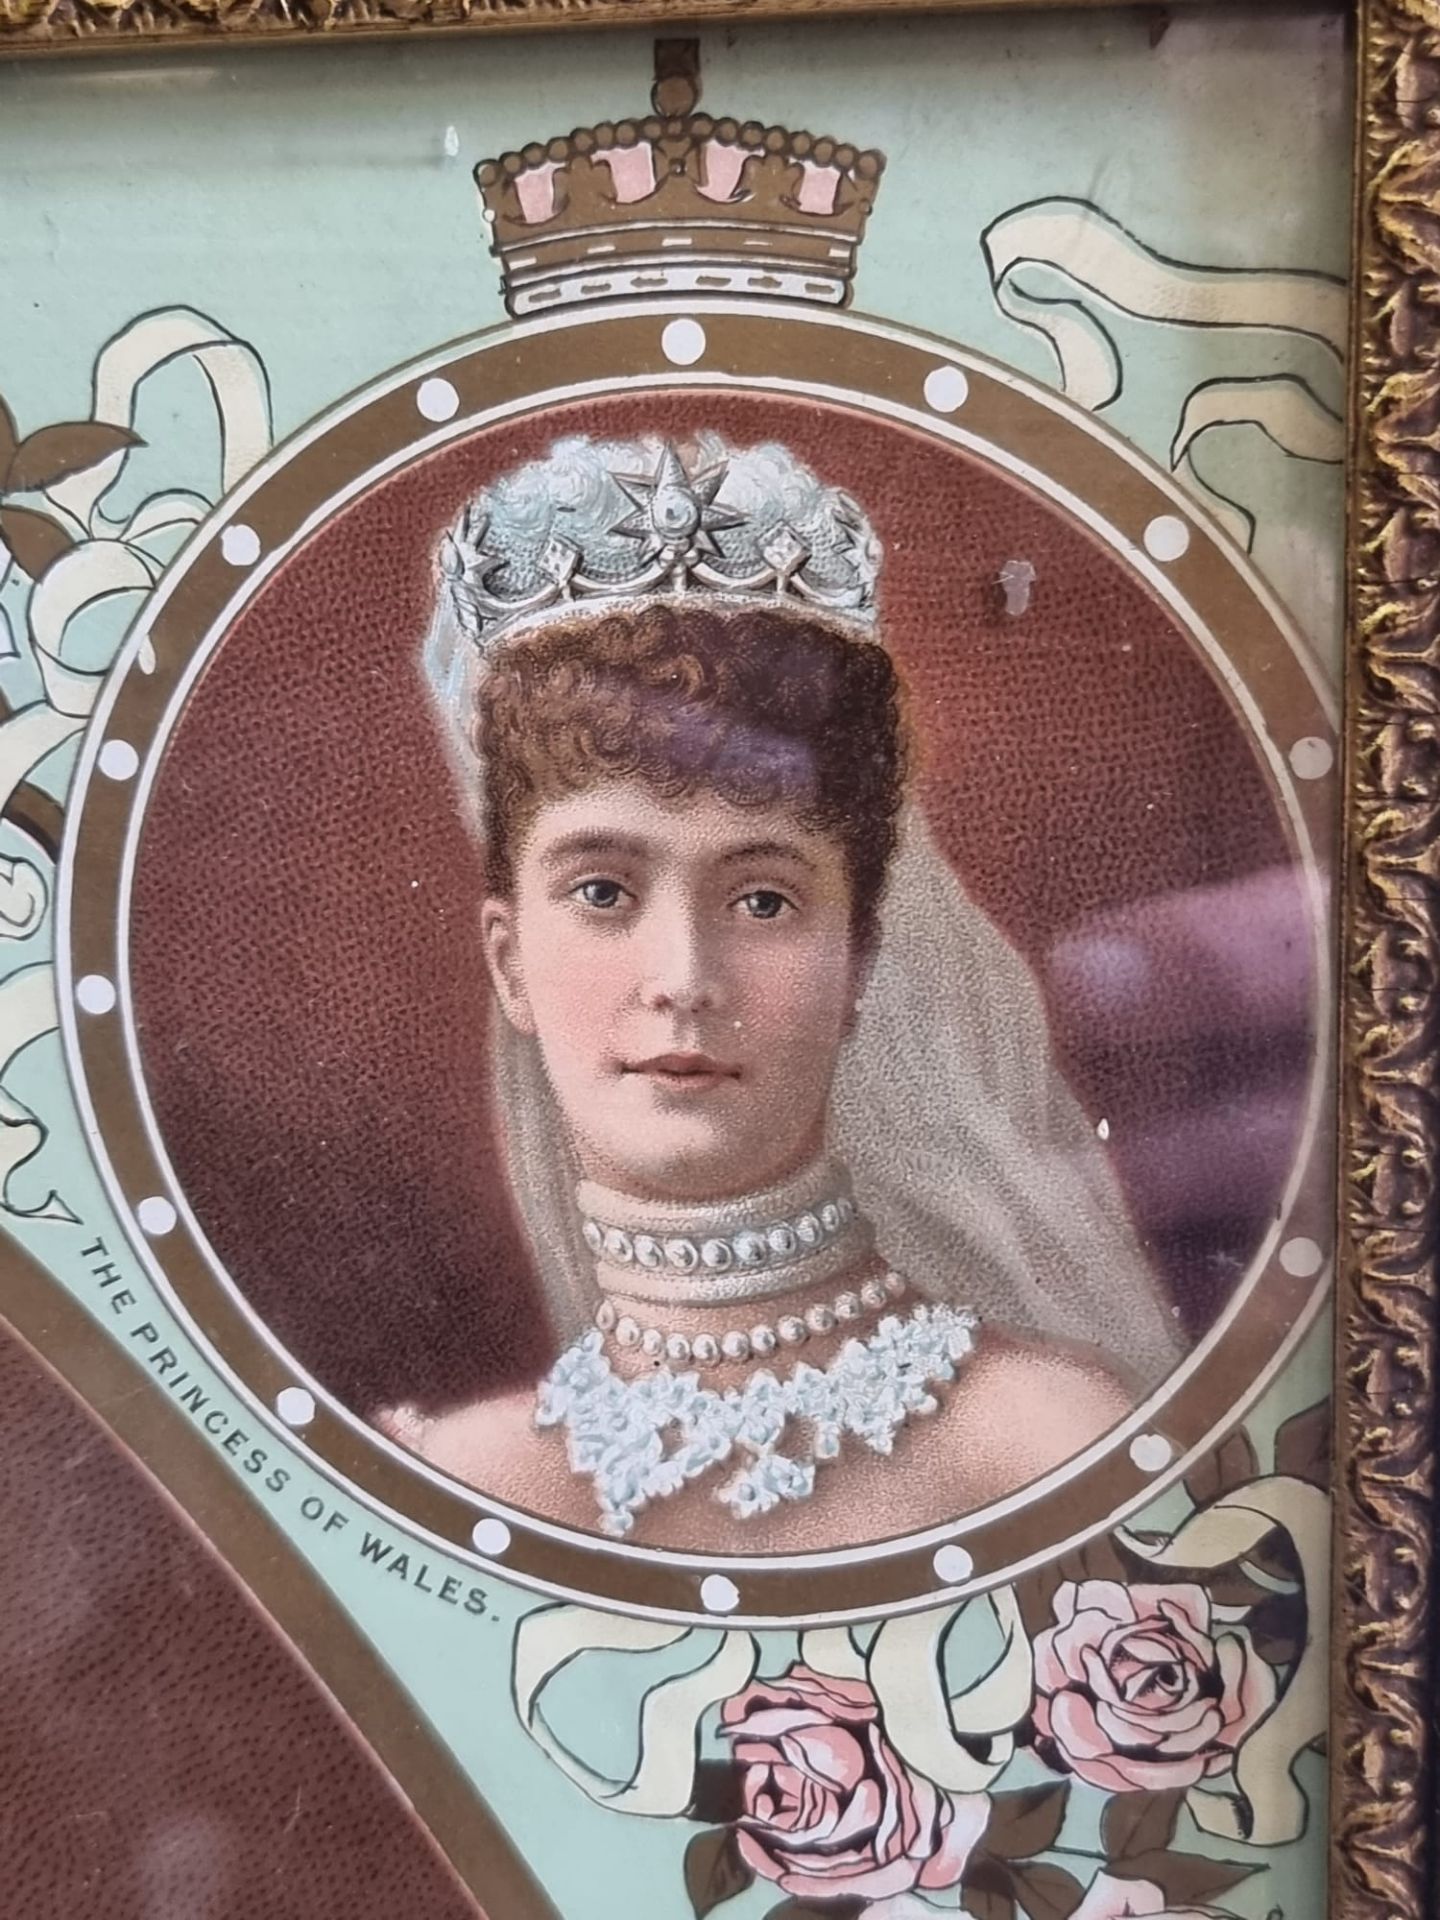 Queen Victoria Framed Print With Inscription Plate Under Her Majesty Queen Victoria Empress Of India - Bild 3 aus 9